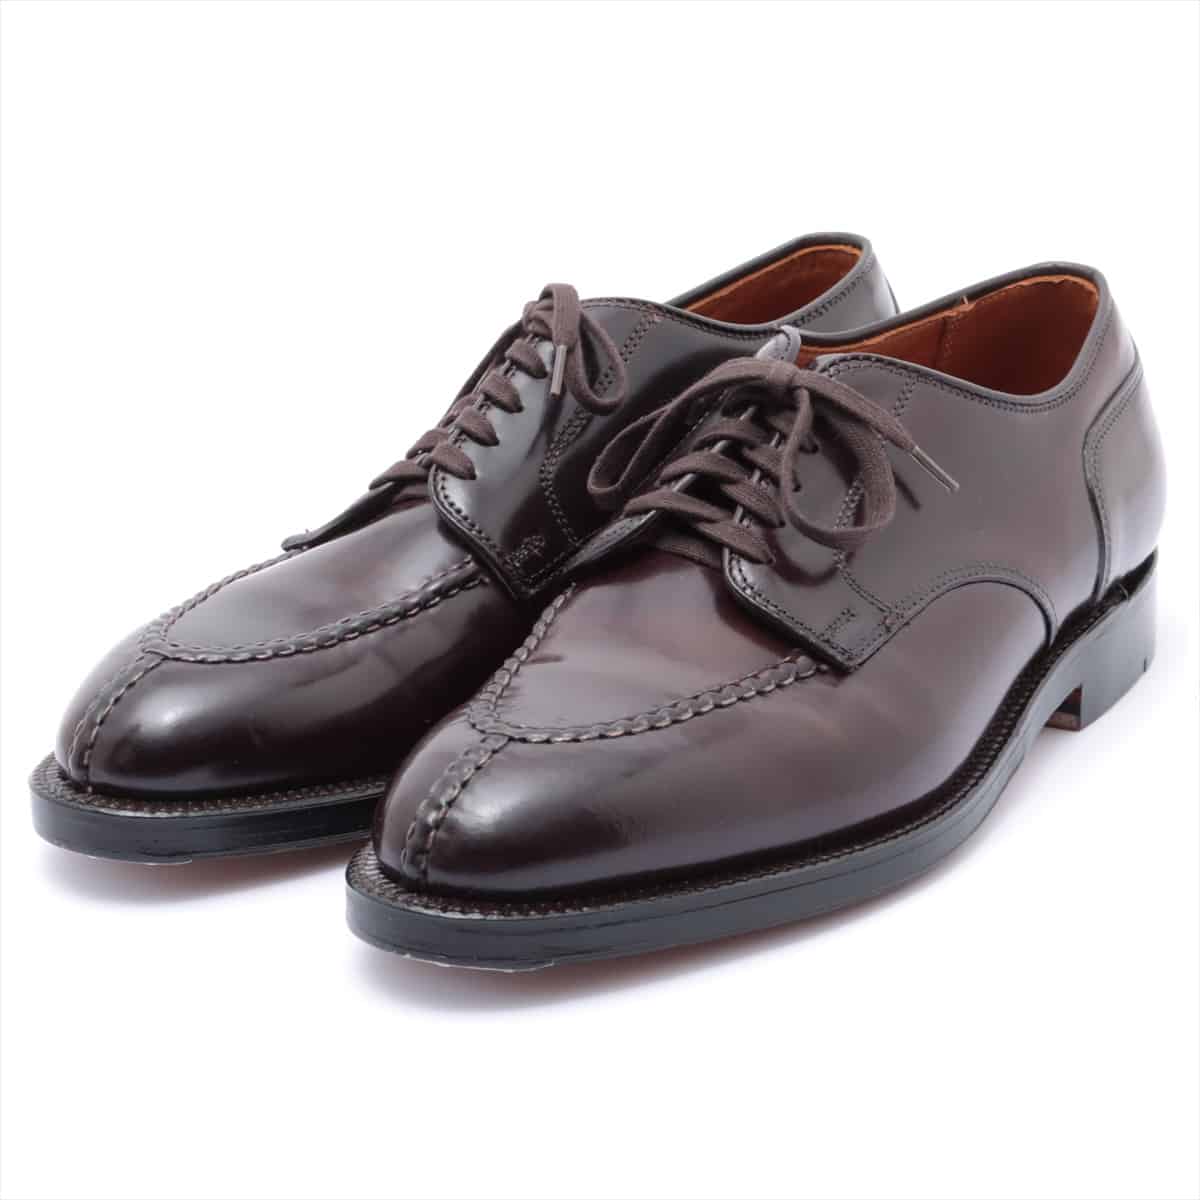 Alden Cordovan Leather shoes 8 Men's Burgundy 2210